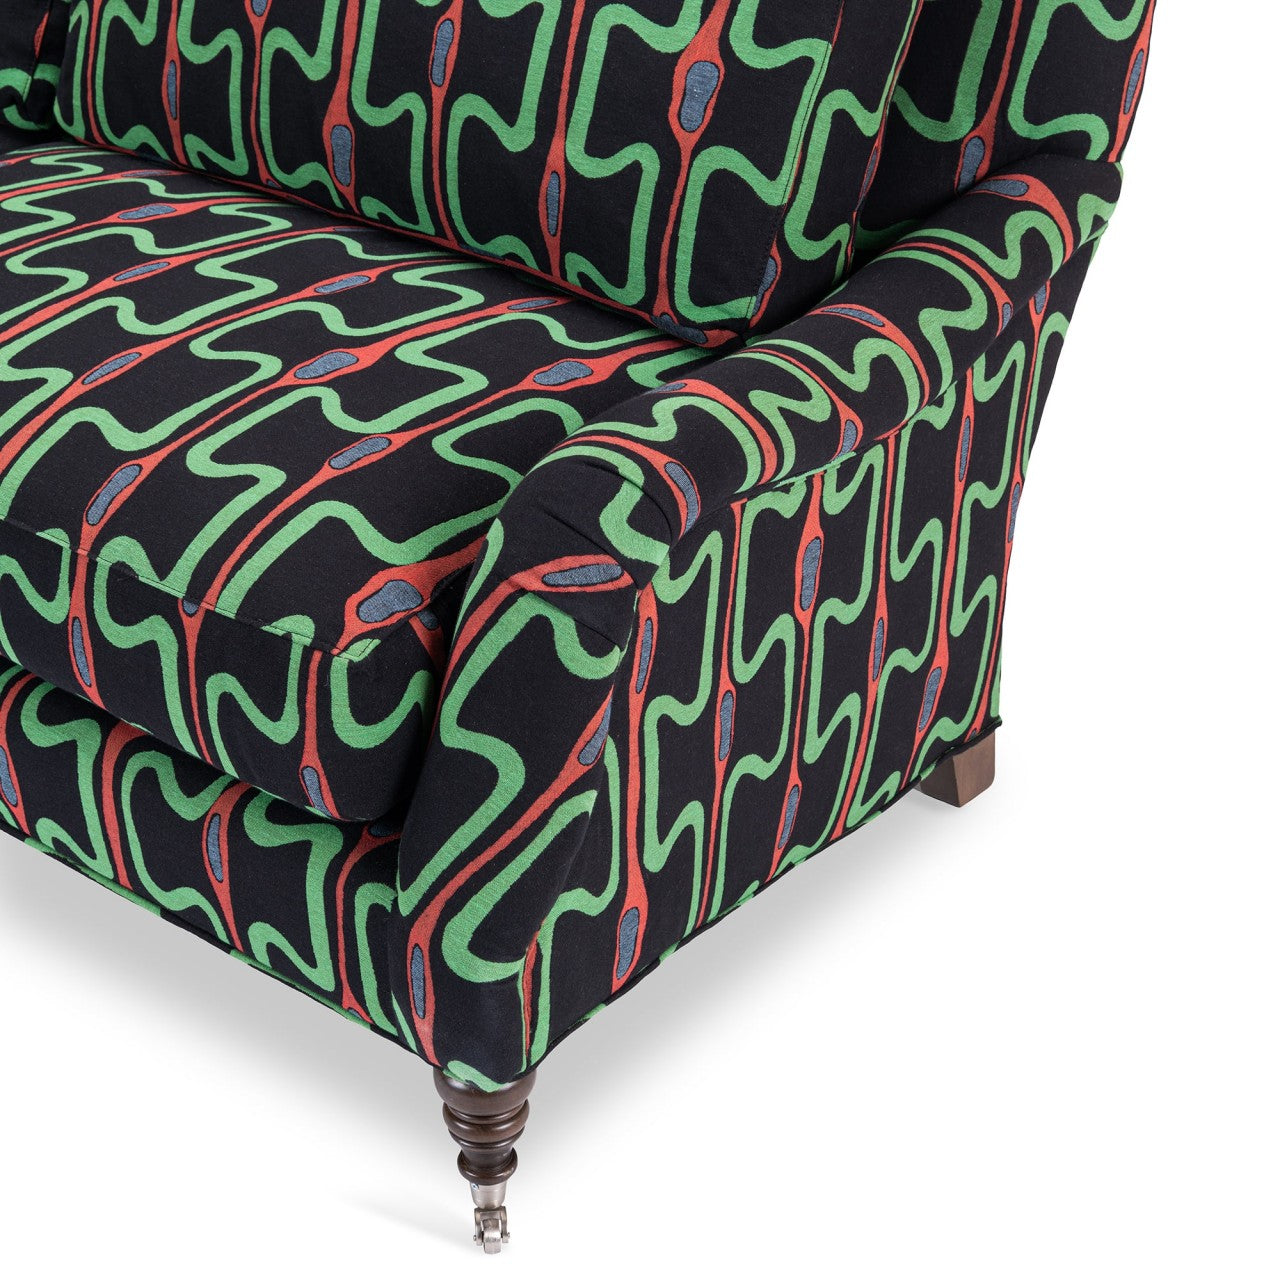 Thomas Sofa - Fluente Woven fabric_Furniture_Mindthegap